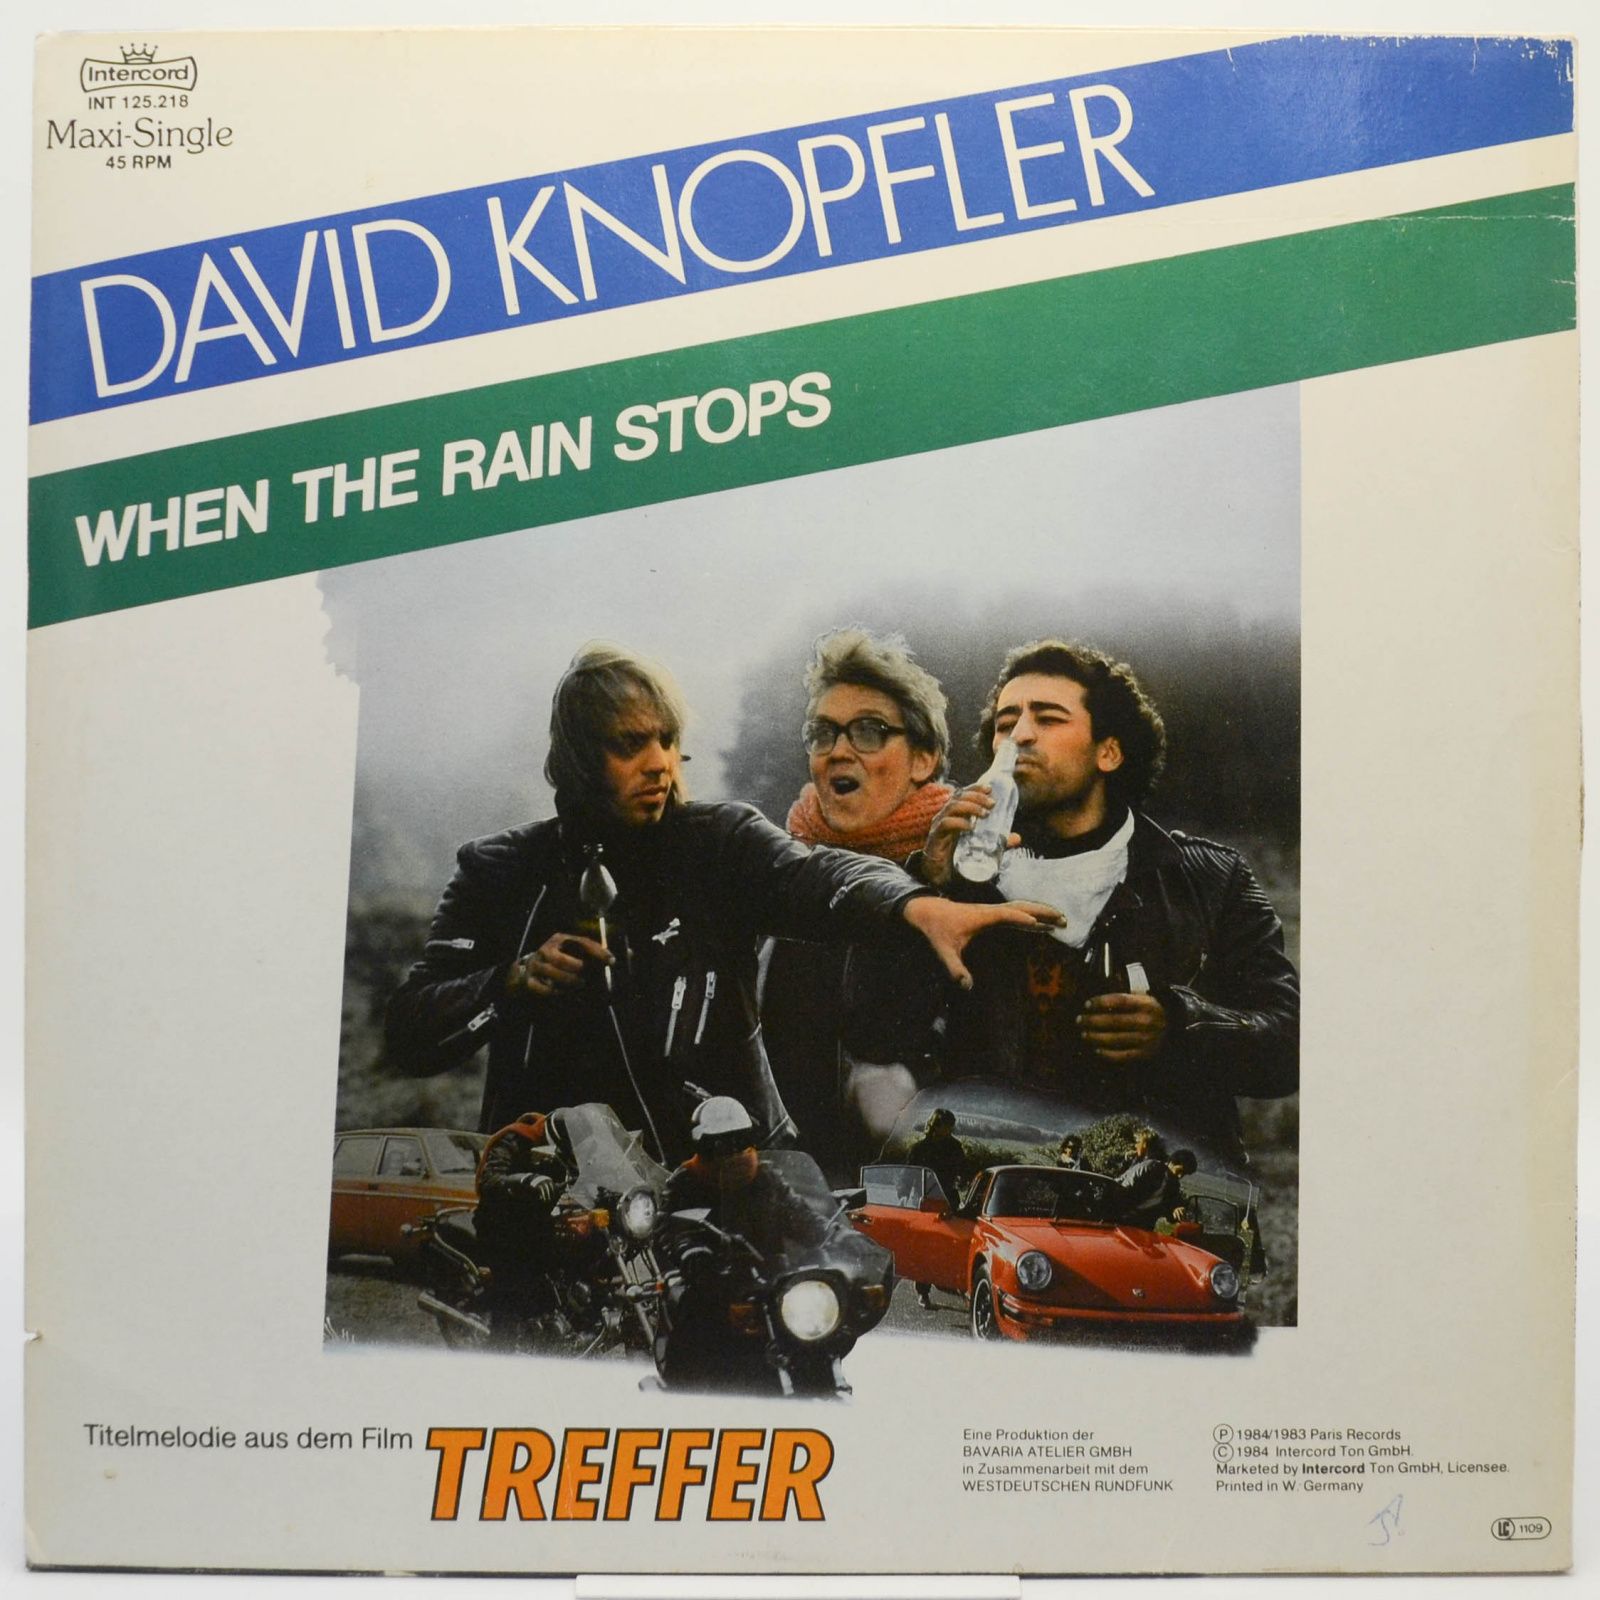 David Knopfler — When The Rain Stops, 1984